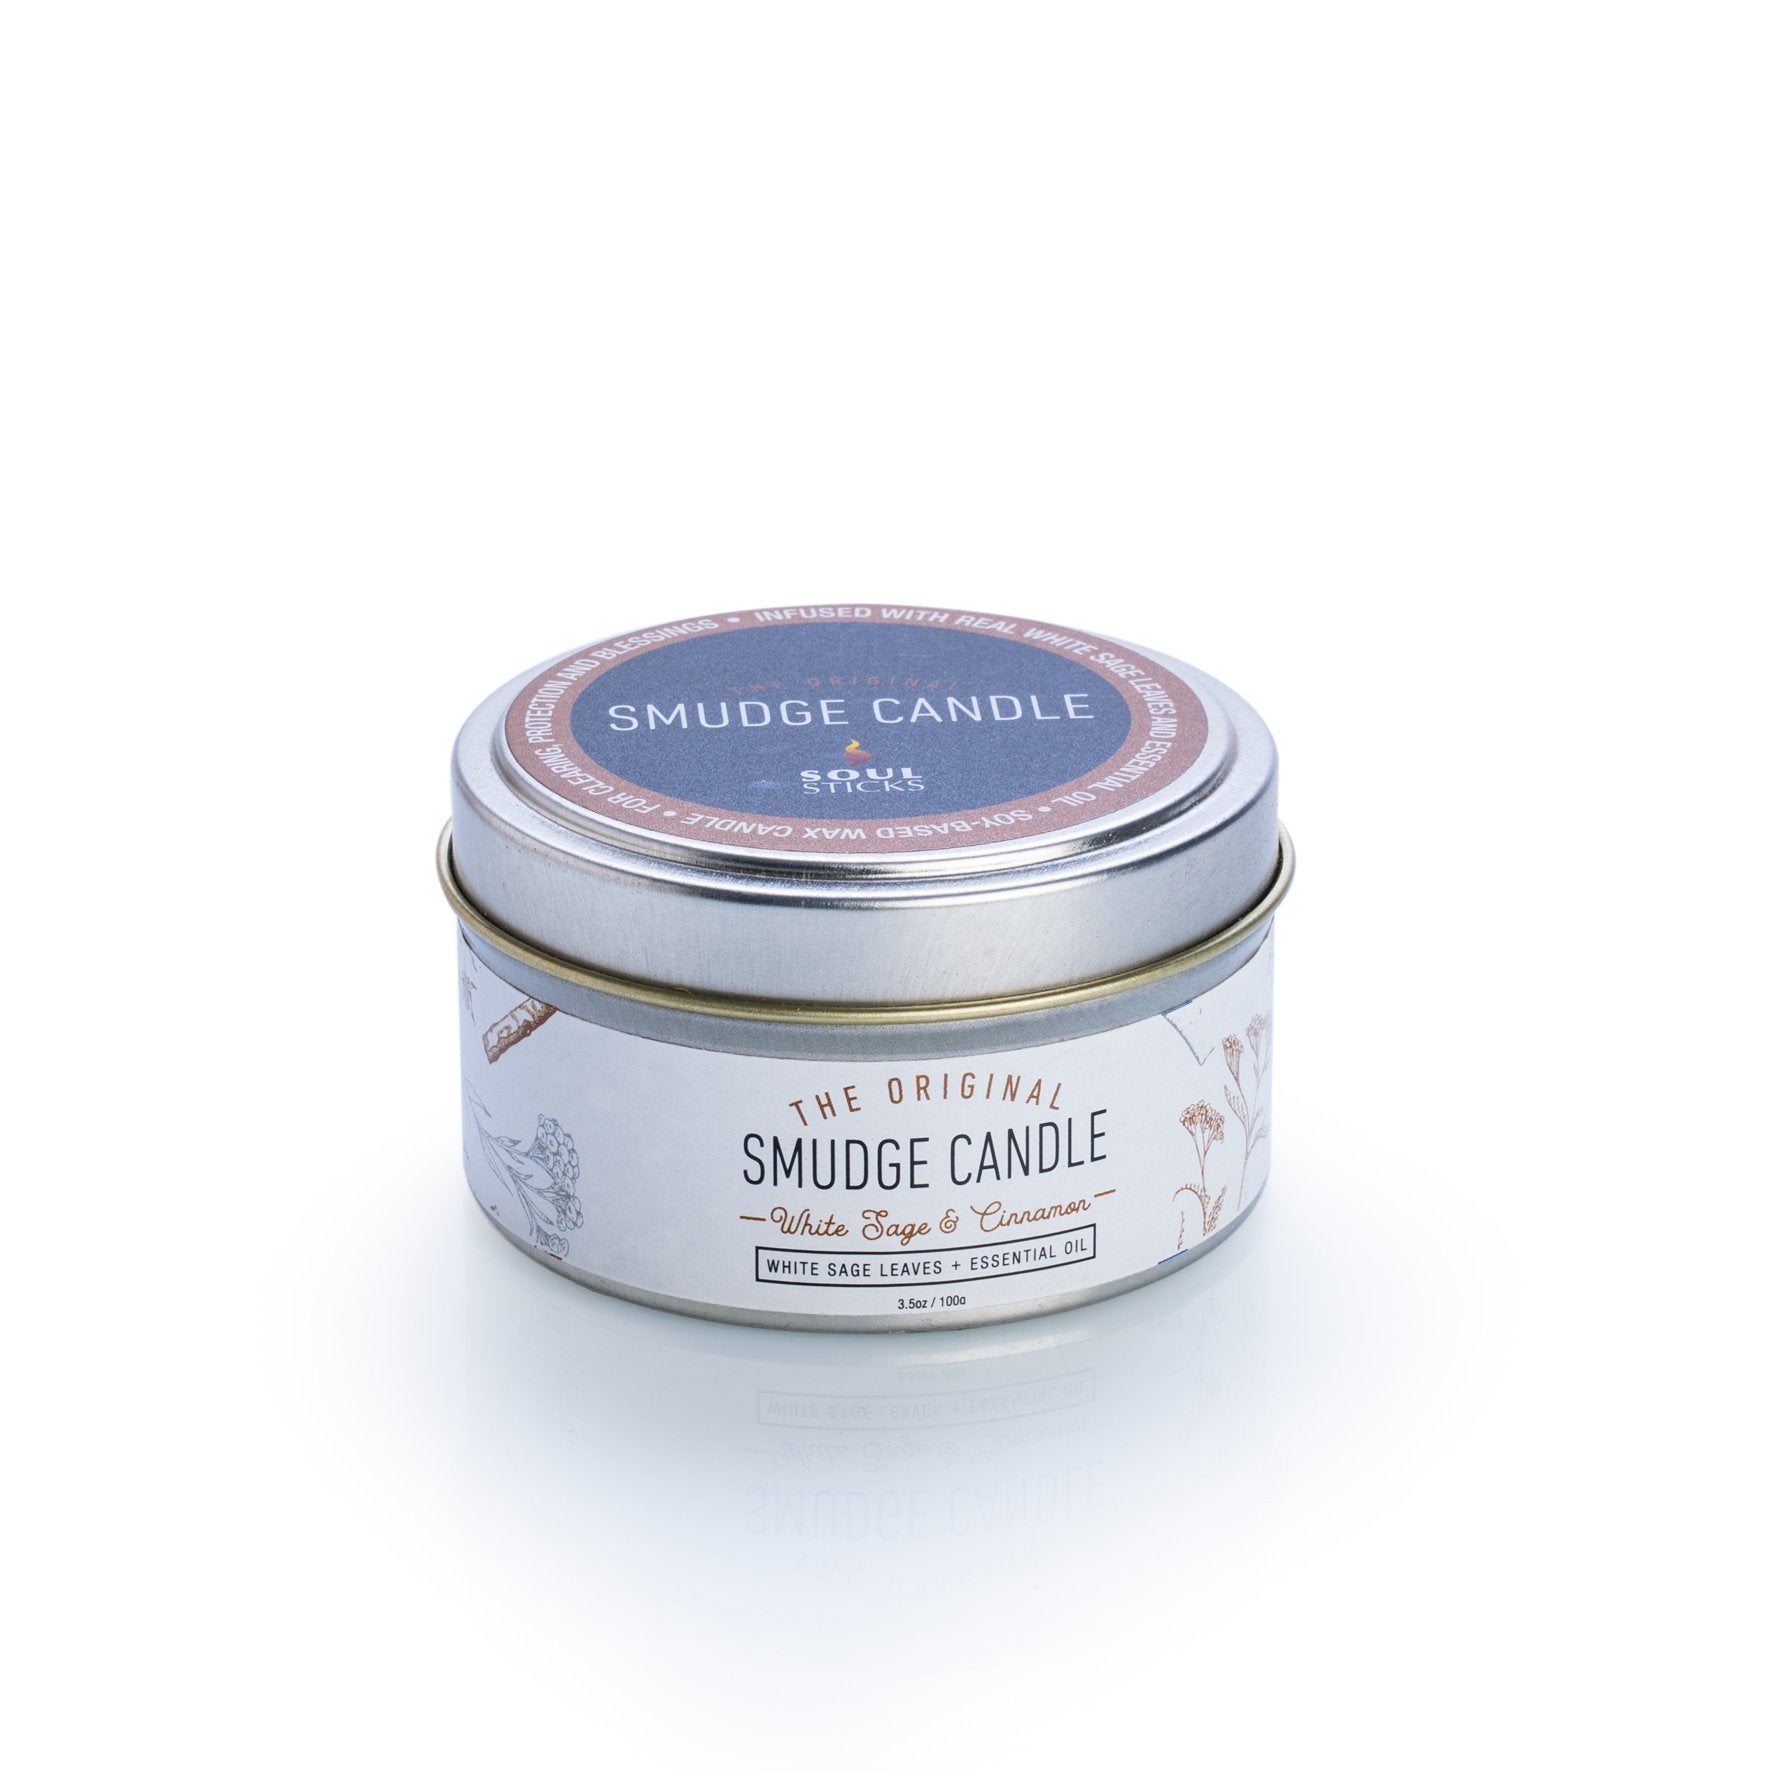 Smudge candle - white sage & cinnamon - Rivendell Shop